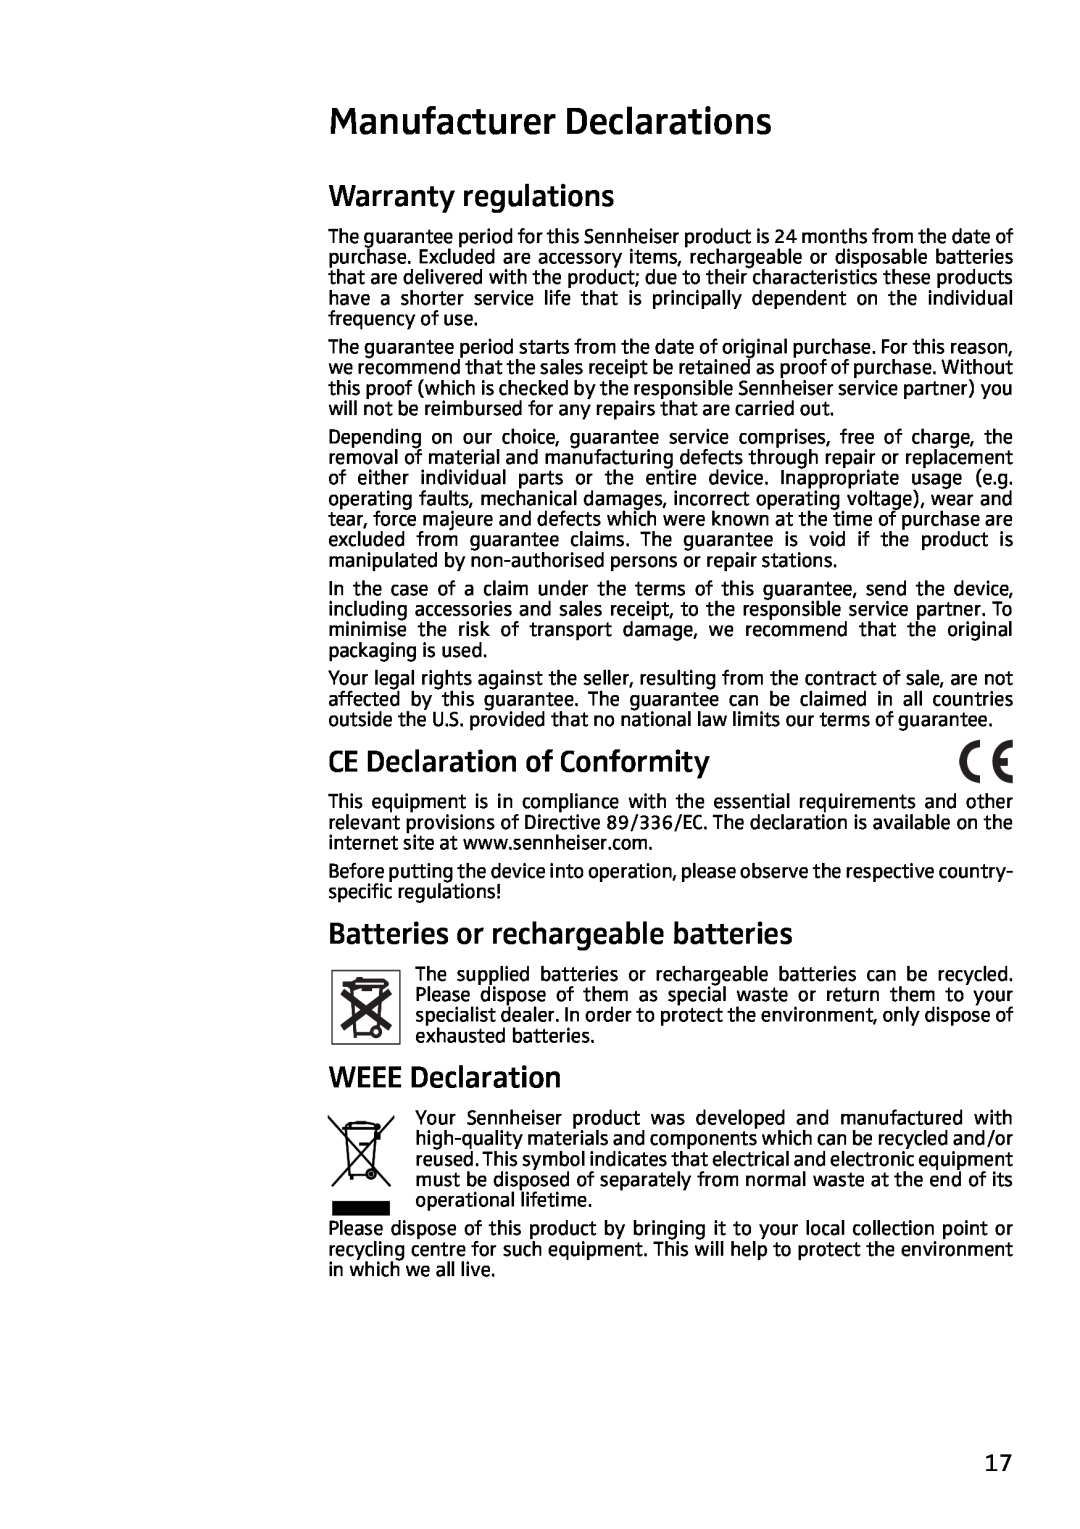 Sennheiser IS410 manual Manufacturer Declarations, Warranty regulations, CE Declaration of Conformity, WEEE Declaration 